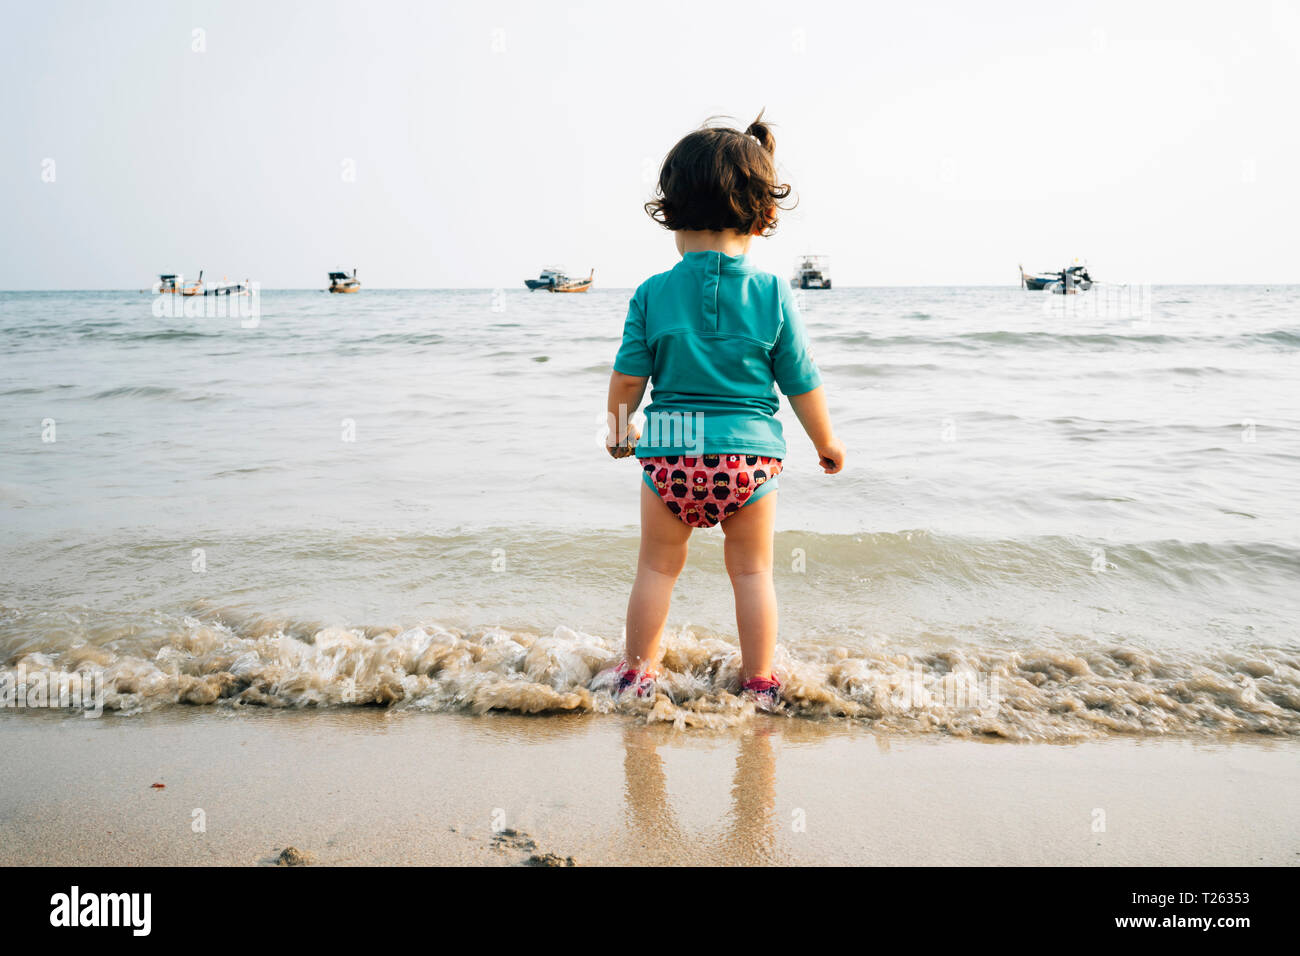 La Thaïlande, Koh Lanta, vue arrière de baby girl wearing UV protection shirt standing at seashore Banque D'Images